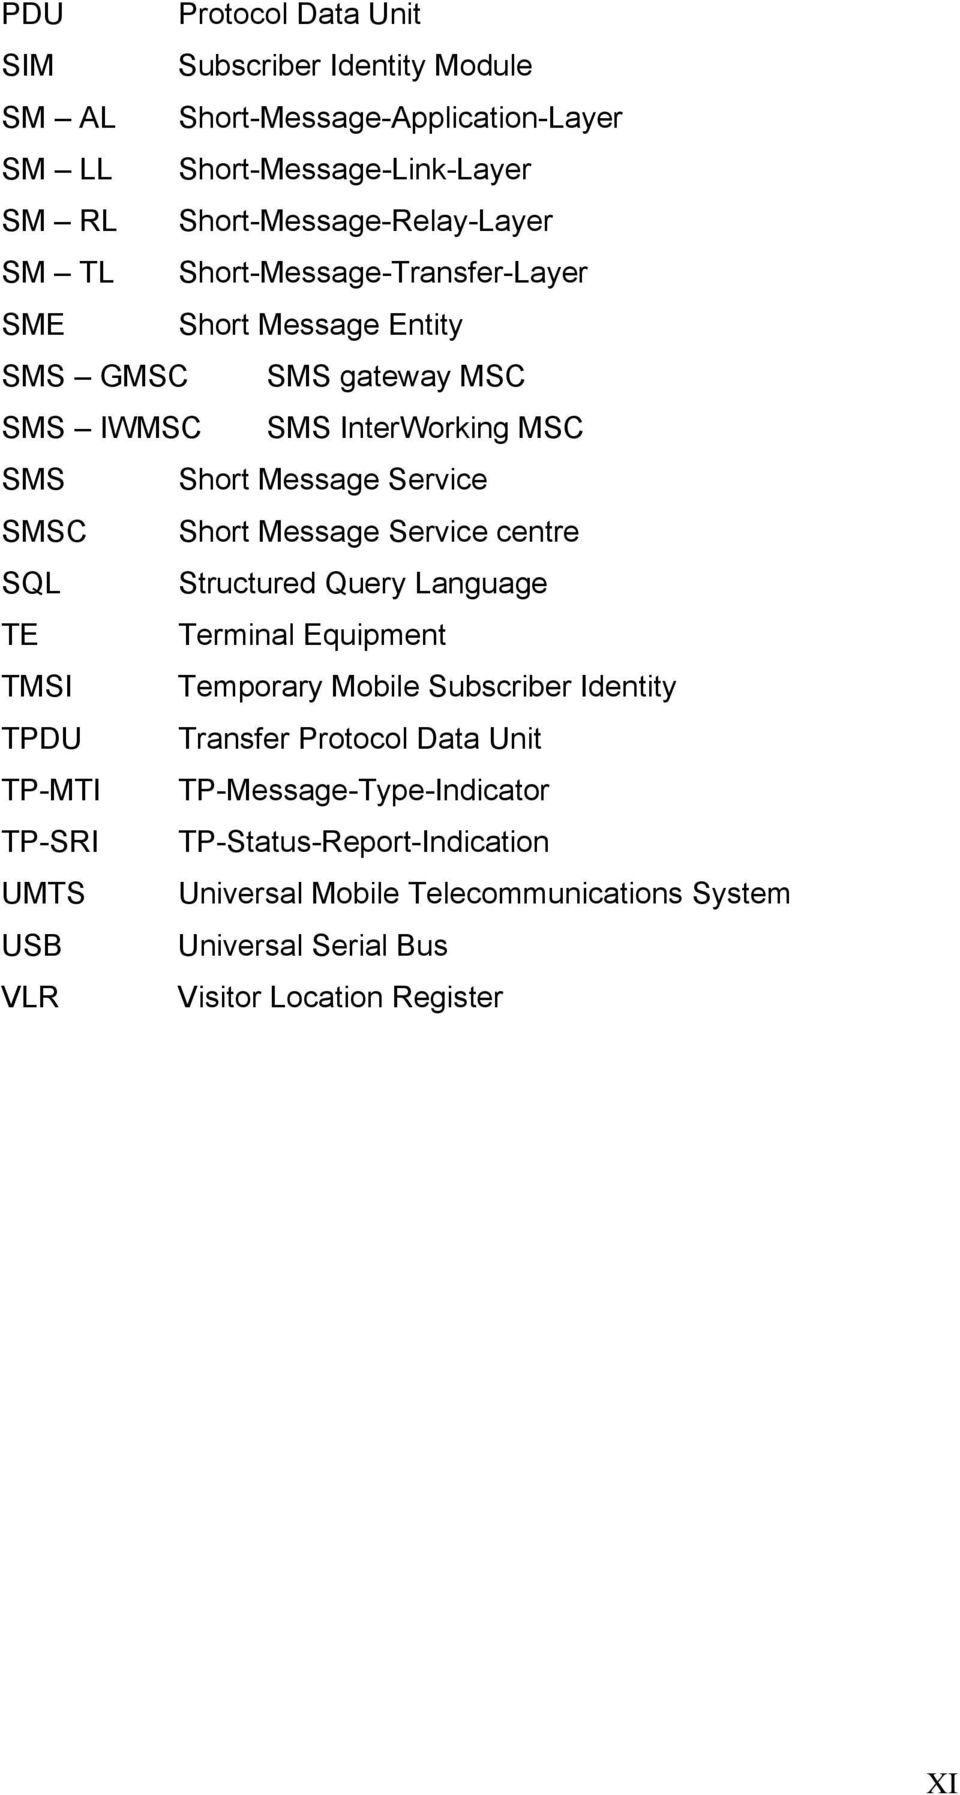 Service centre SQL Structured Query Language TE Terminal Equipment TMSI Temporary Mobile Subscriber Identity TPDU Transfer Protocol Data Unit TP-MTI